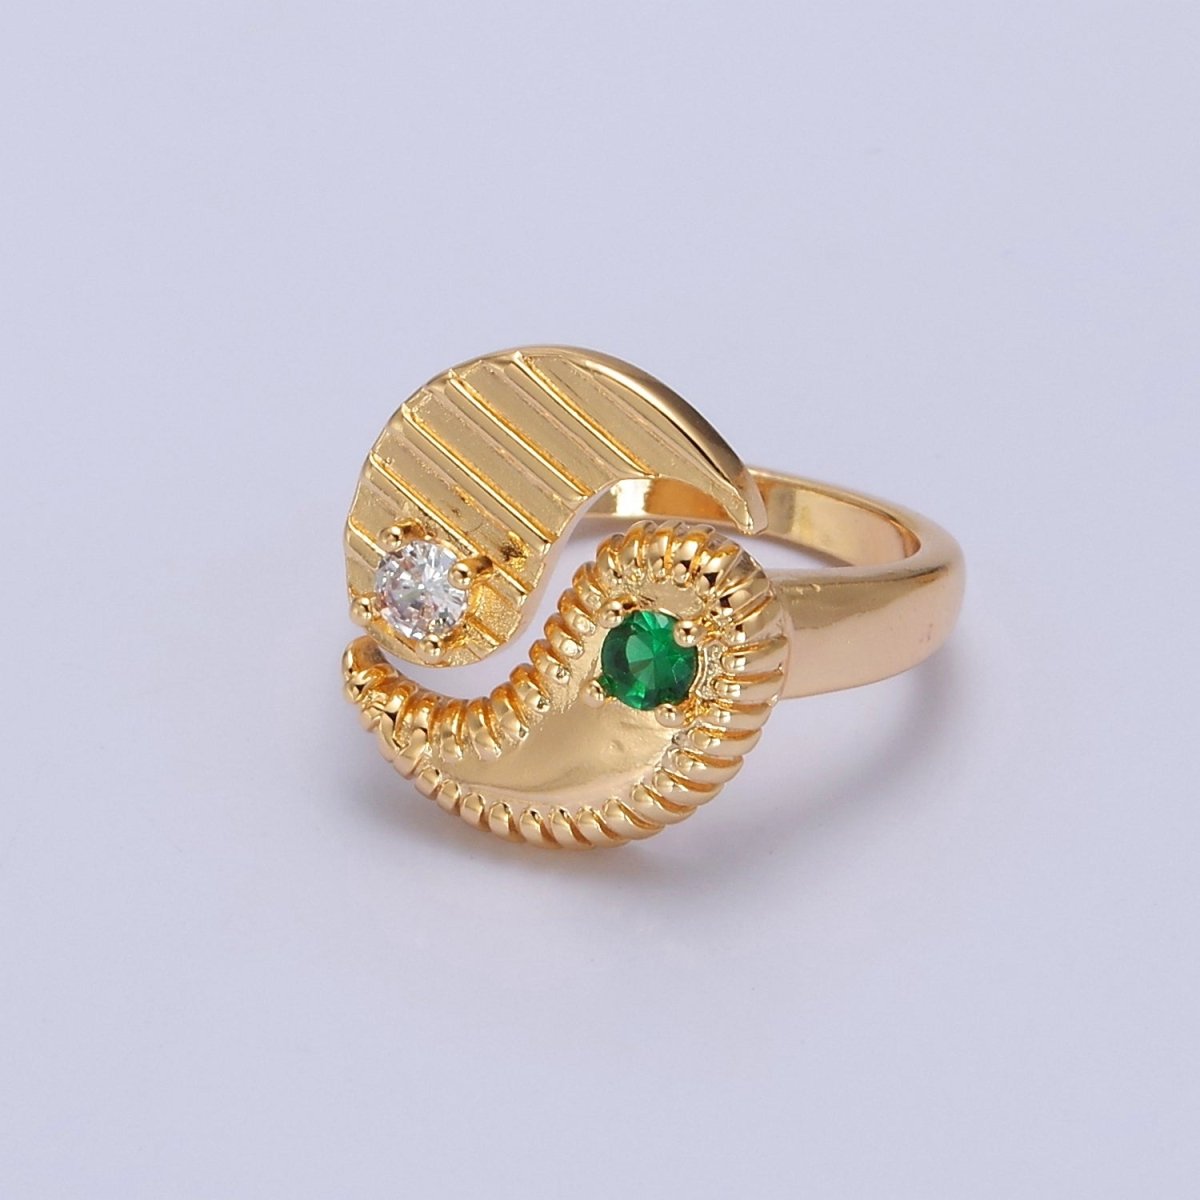 Yin Yang Ring, Adjustable Trendy Yin Yang Ring, Gold Plated, Statement Ring, Trendy Rings O2146 O2147 - DLUXCA